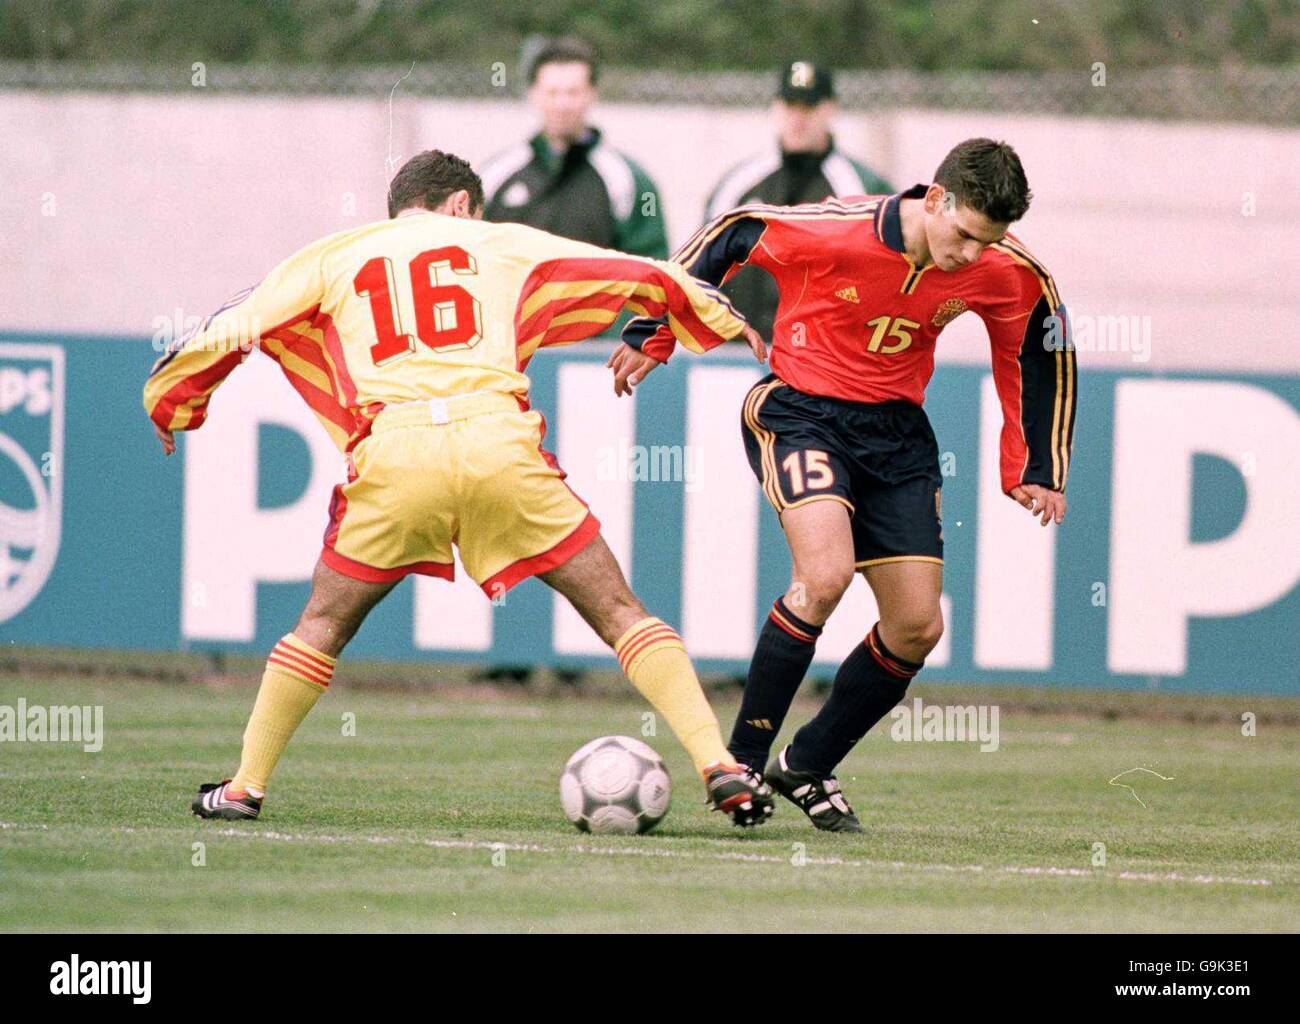 Jaime GAVILAN, Valencia CF and Spain U-16 goes past Romania's Florian Petrica. Stock Photo